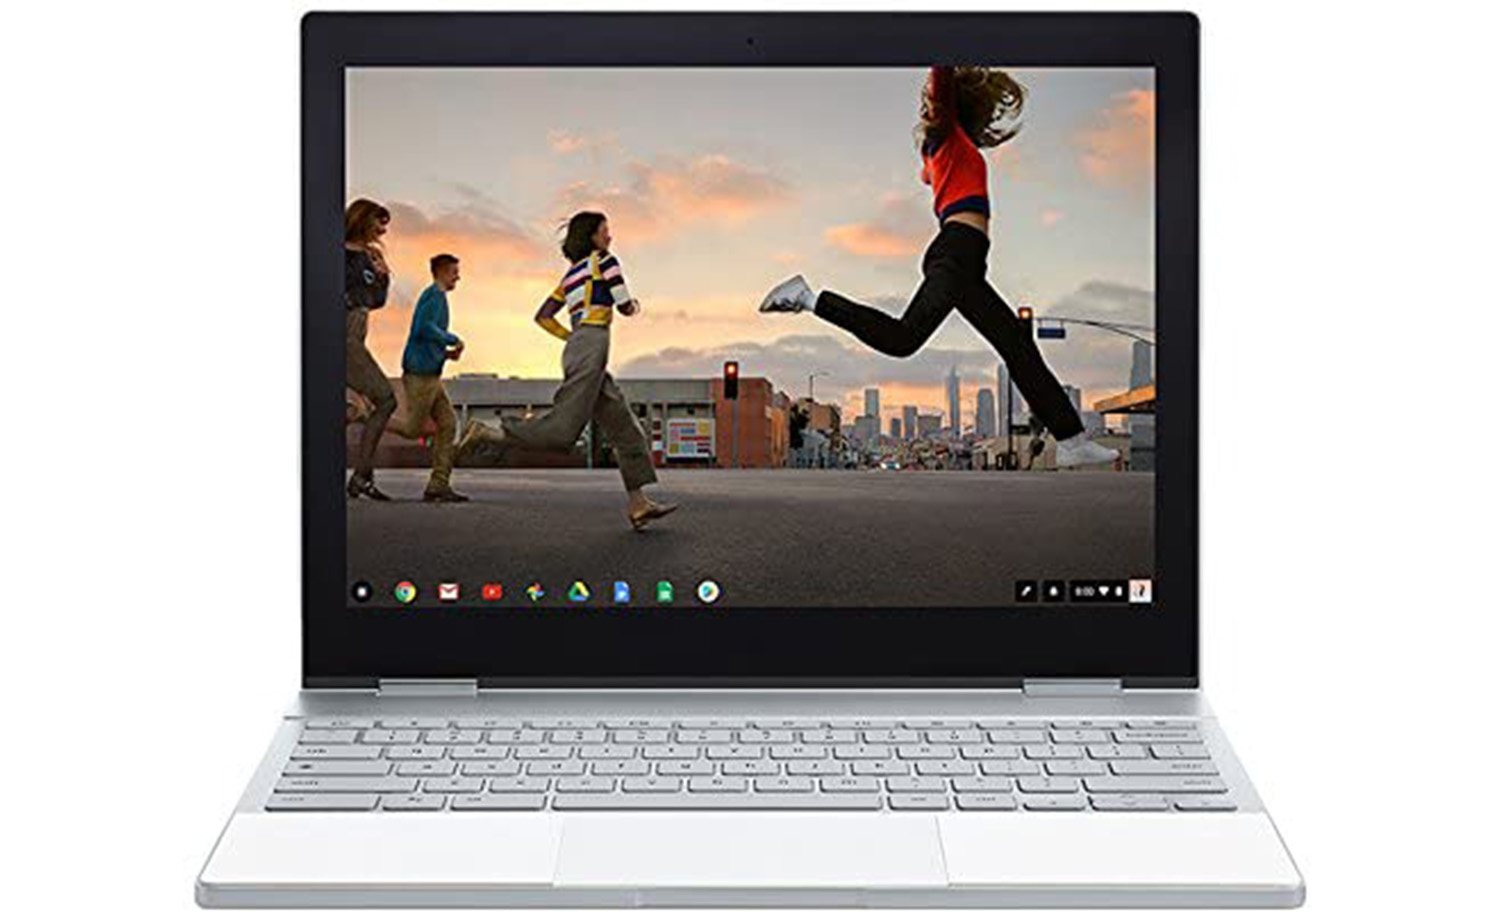 Google PixelBook C0A Intel Core i5 7th Gen 8GB RAM 128GB eMMC Touch ChromeOS